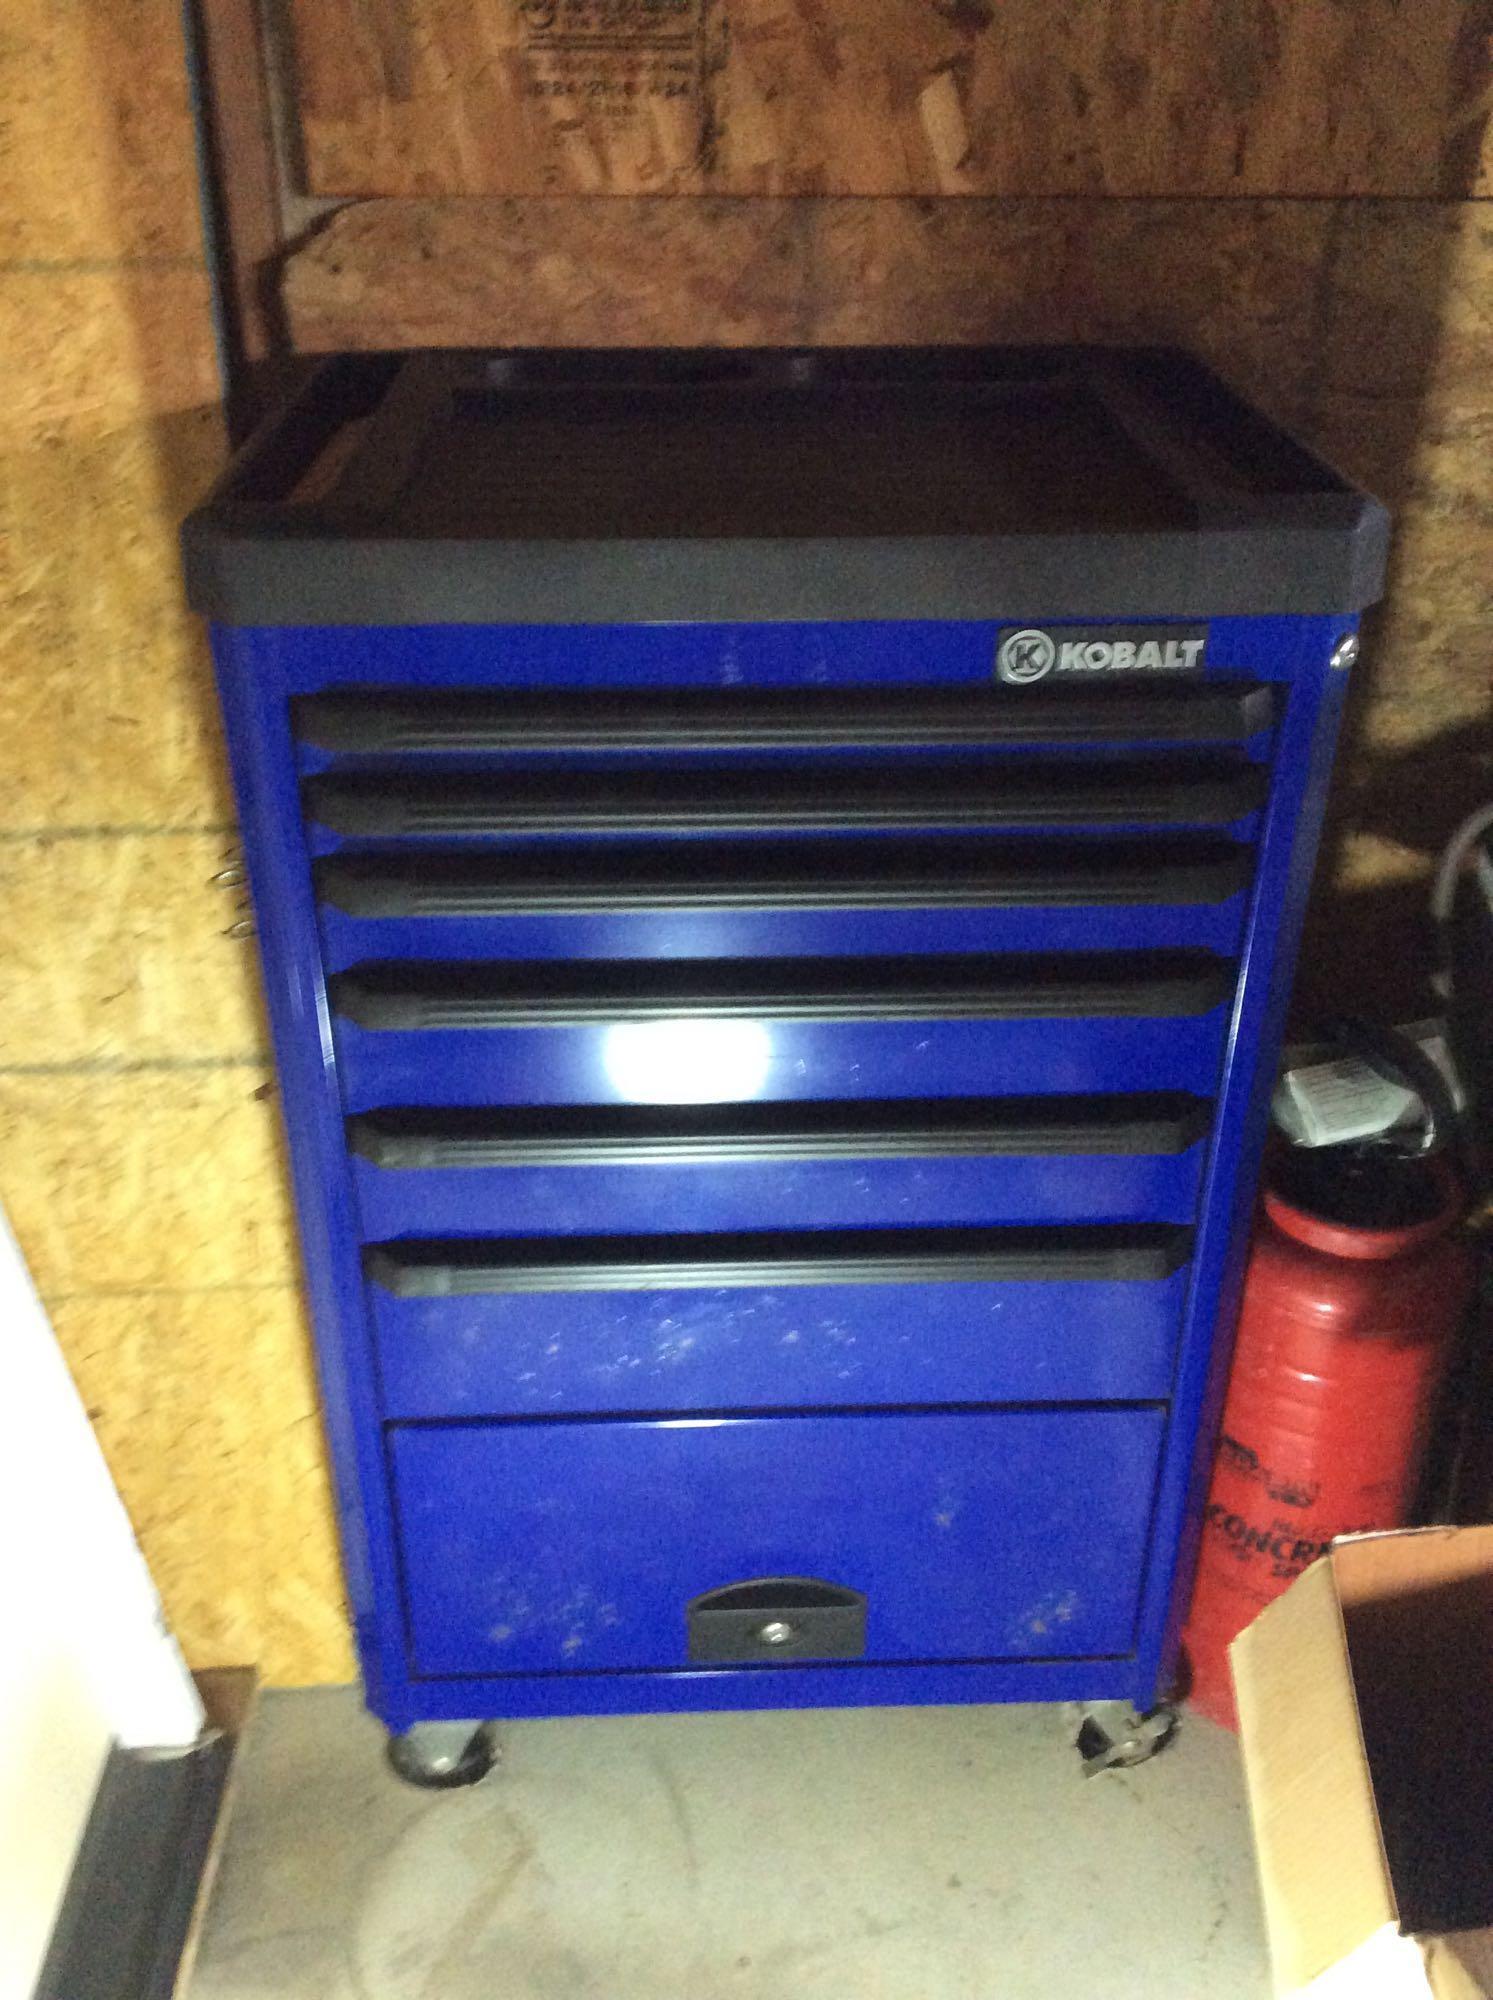 Kobalt 6 drawer toolbox with bottom storage